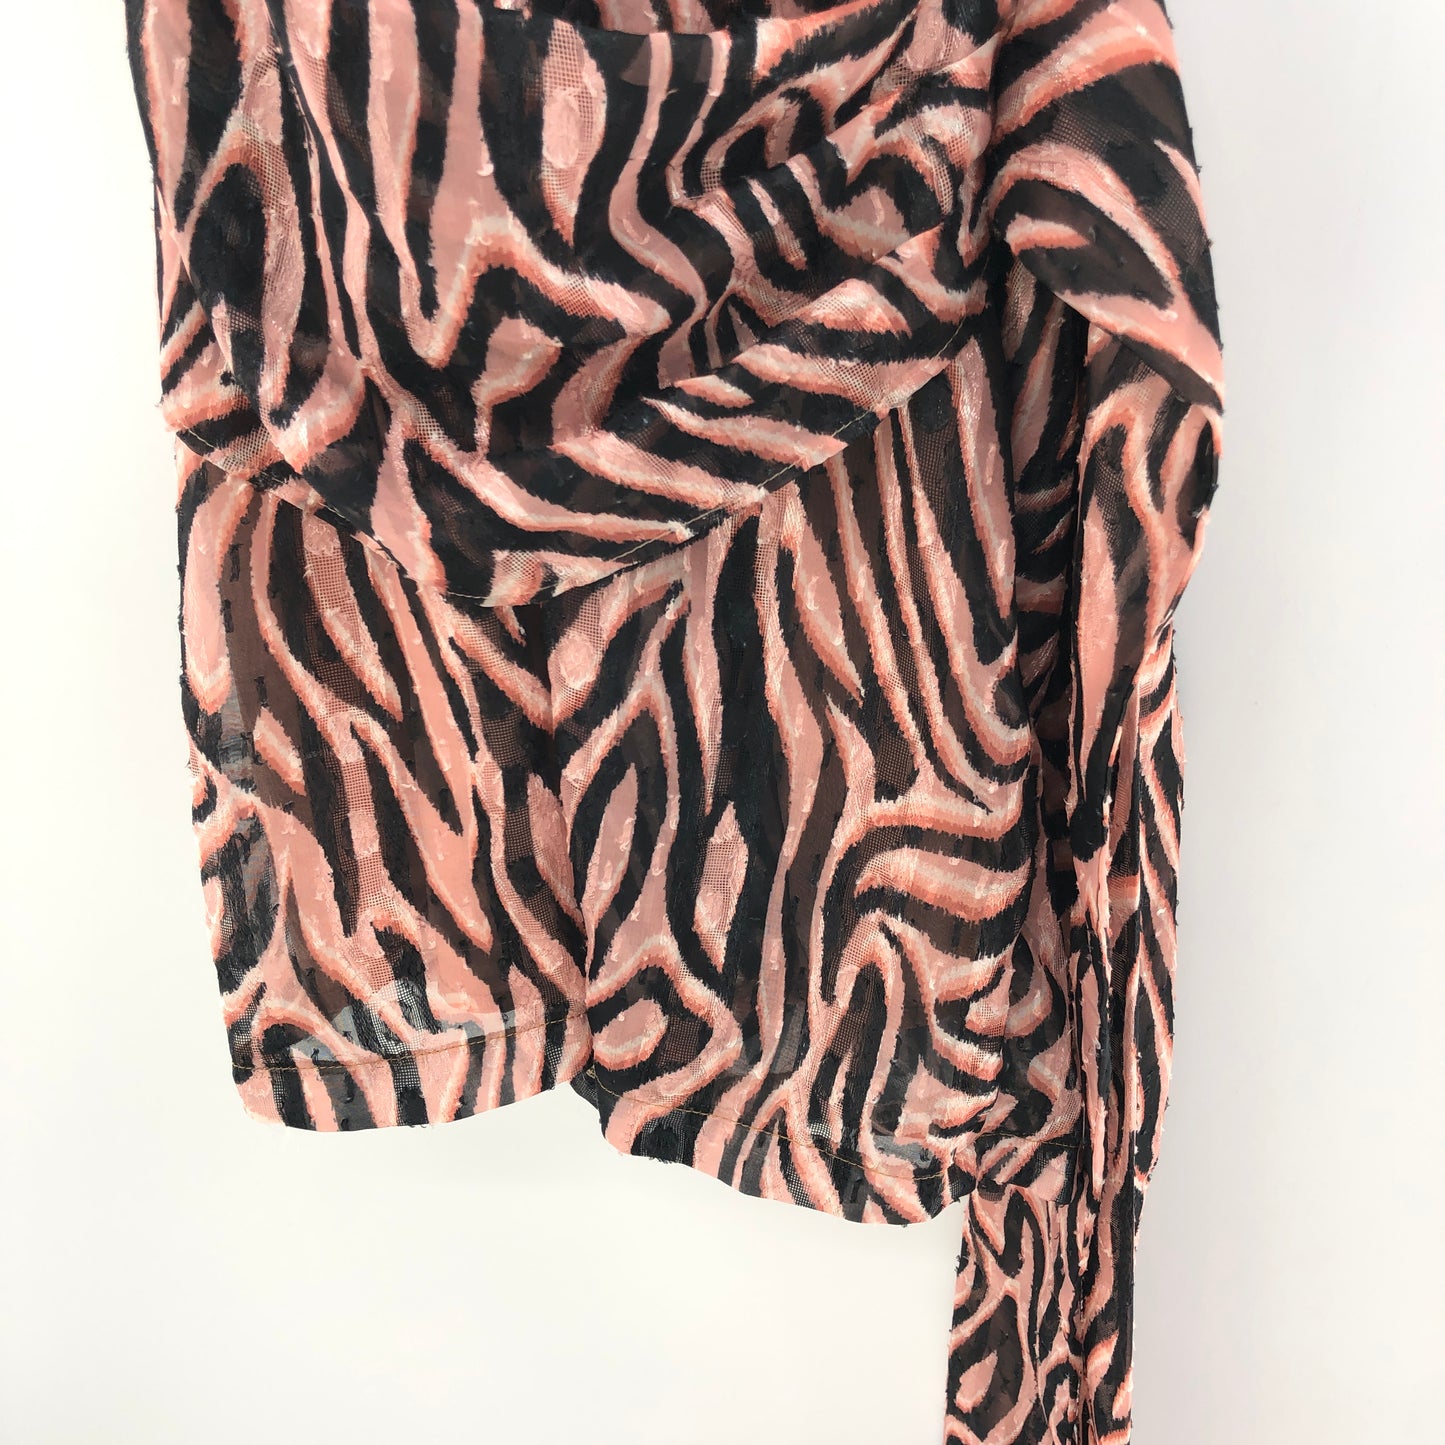 DUNDAS x REVOLVE Lana Mini Dress in Natural Zebra